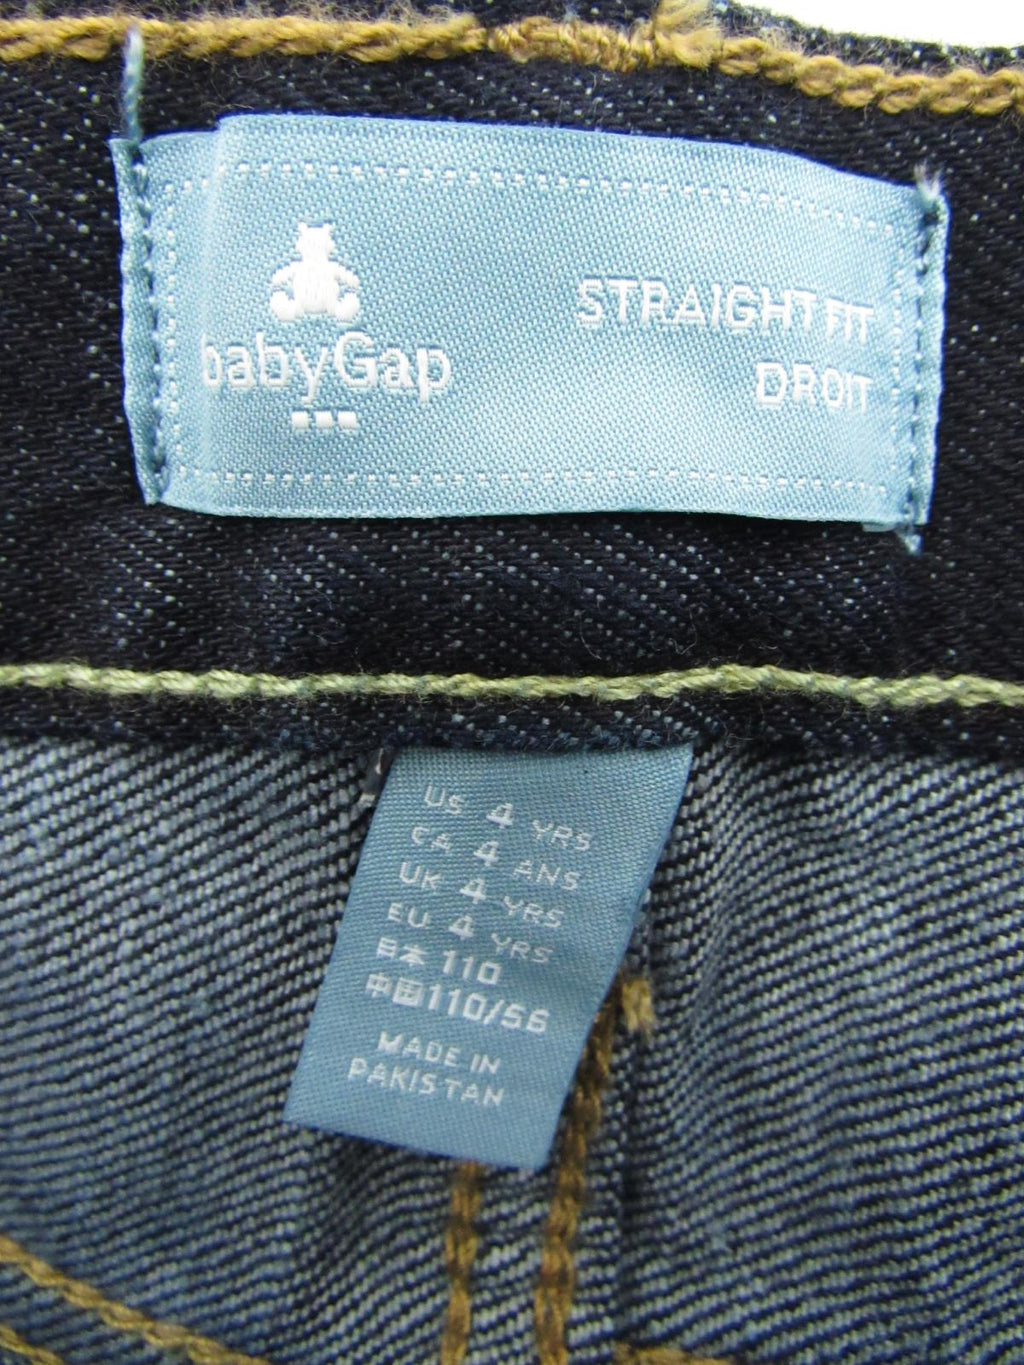 baby gap jeans